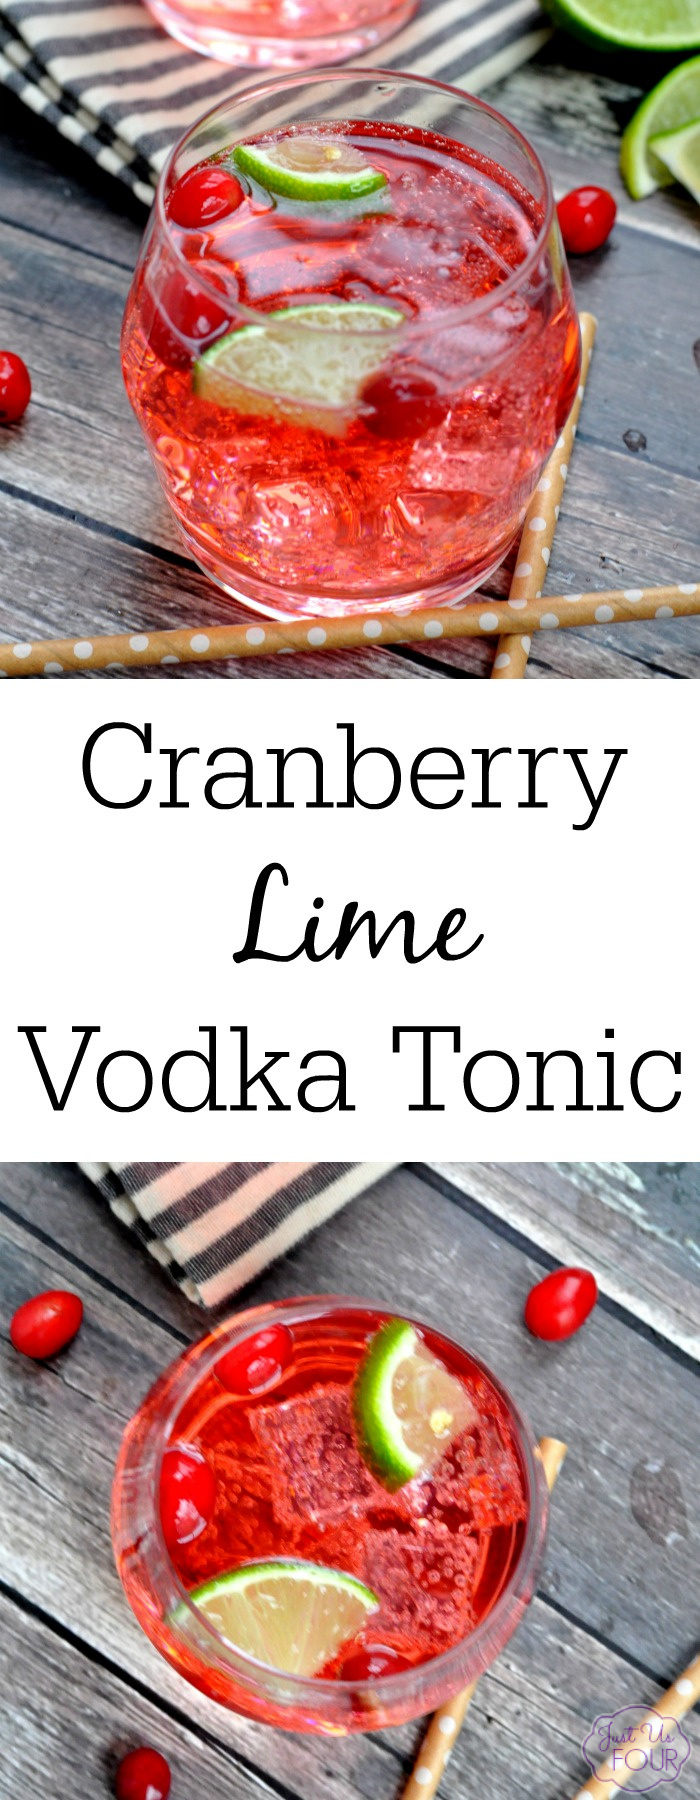 Cranberry Lime Vodka Tonic